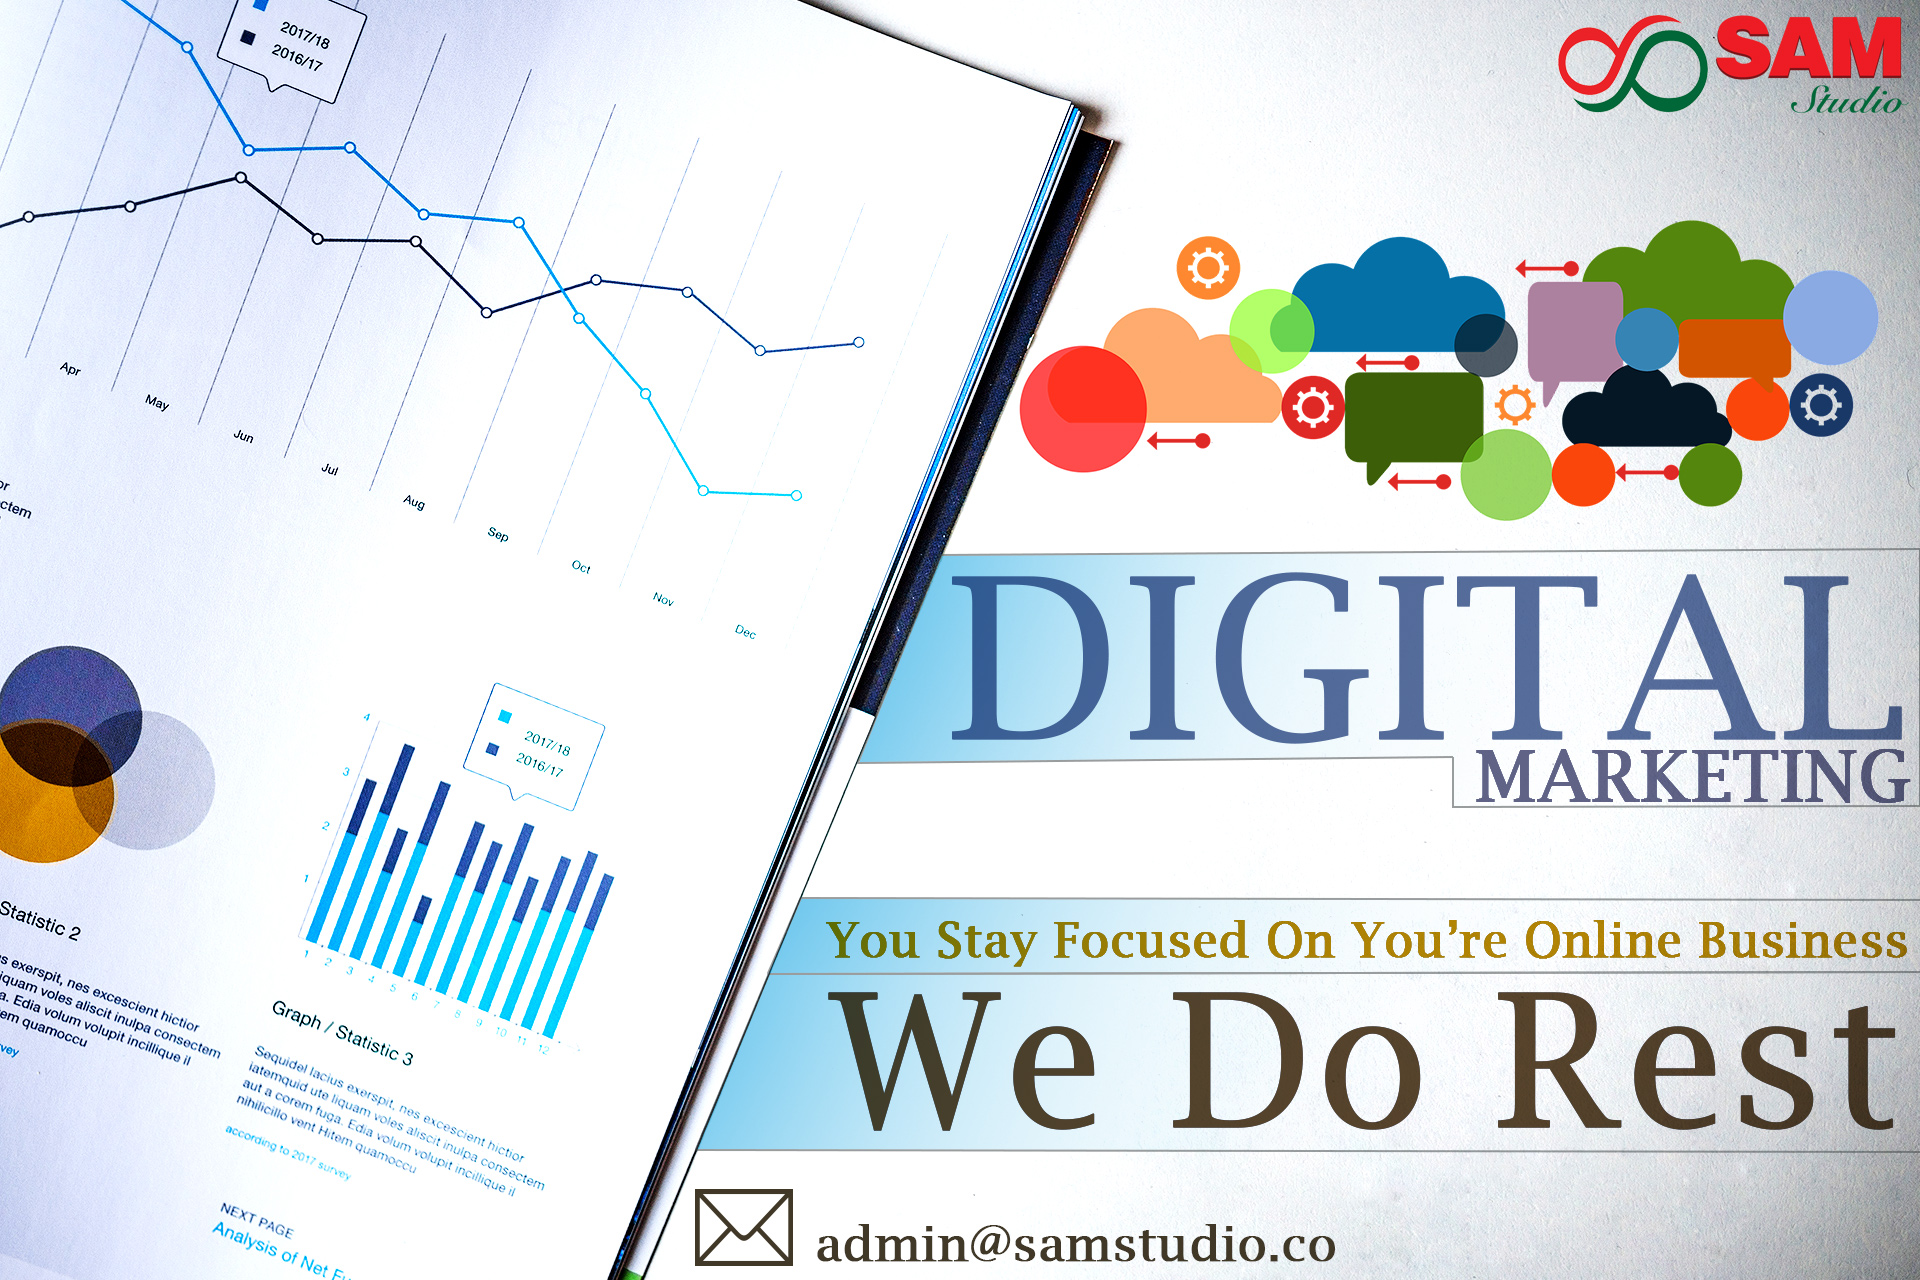 Digital Marketing Service: SEO, Social Media, Internet and E-mail Marketing